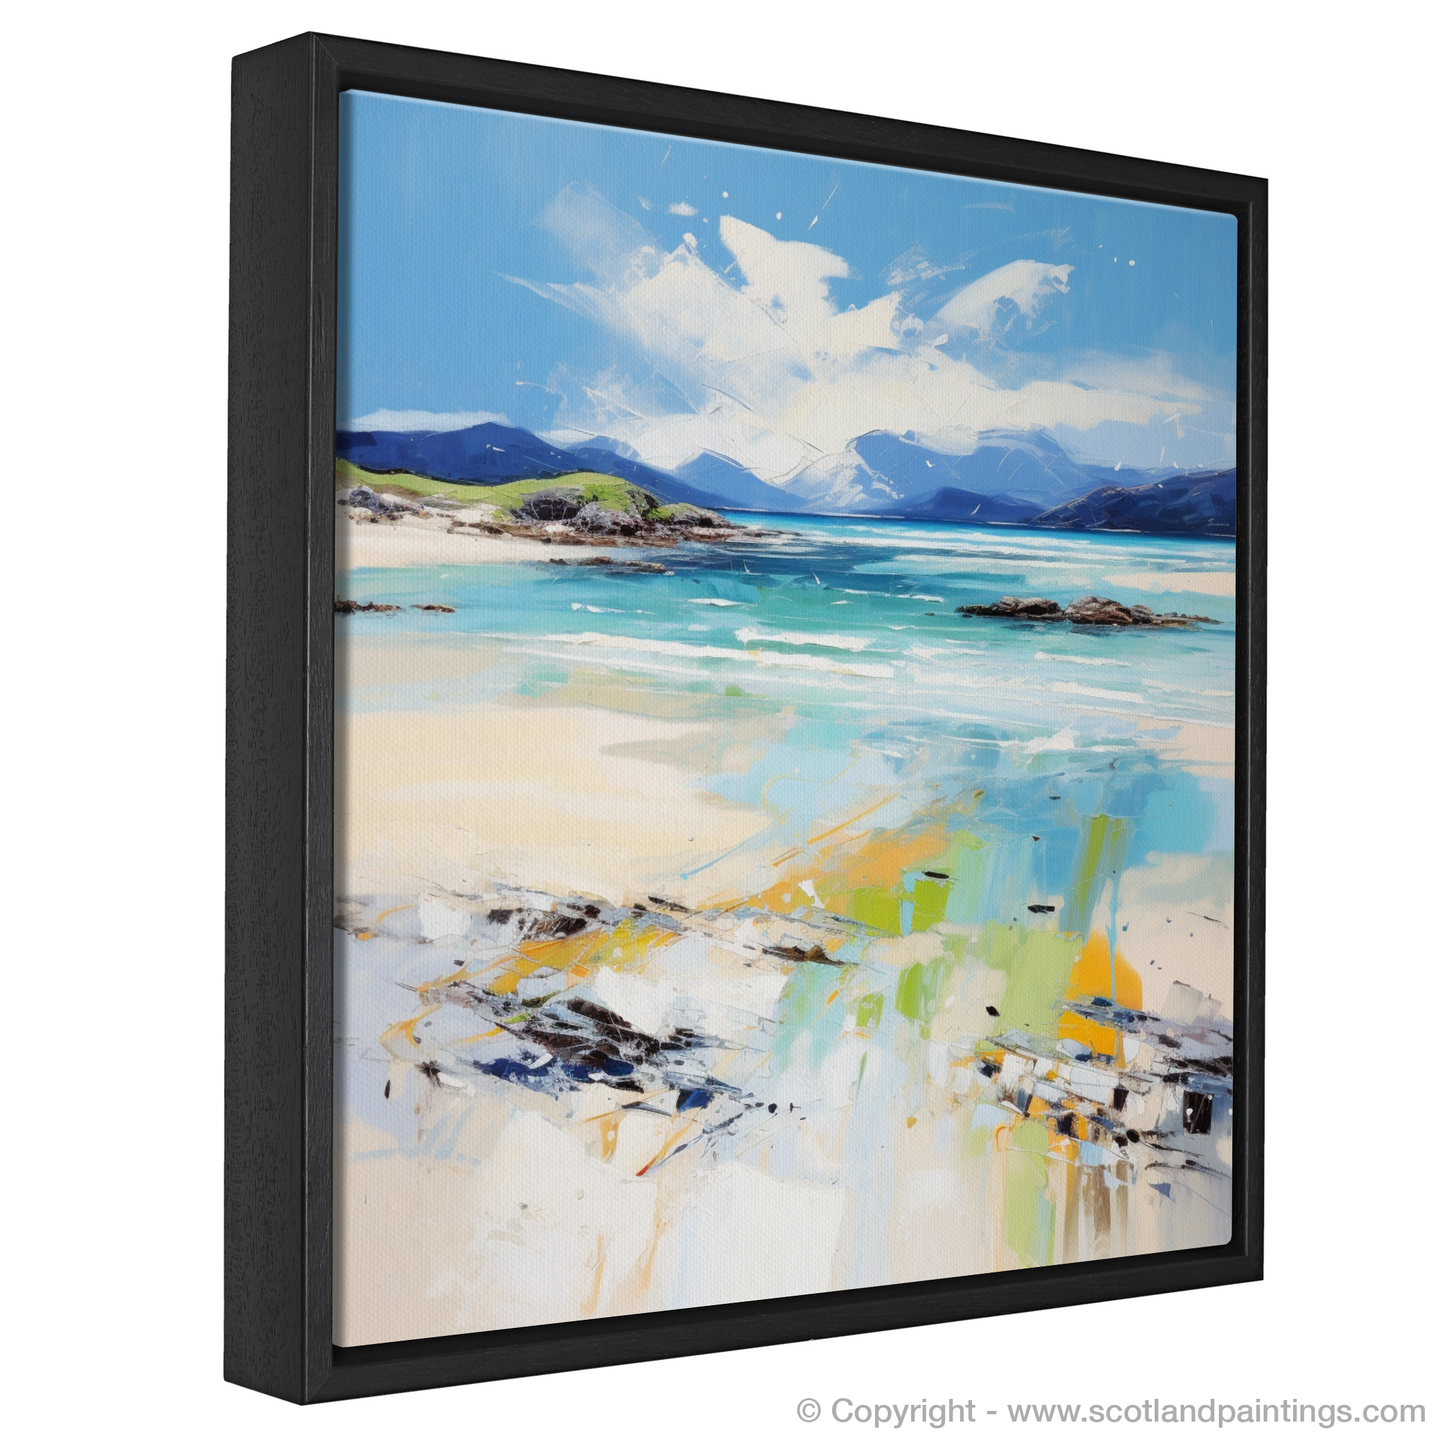 Painting and Art Print of Seilebost Beach, Isle of Harris in summer. Summer Serenade at Seilebost Beach.